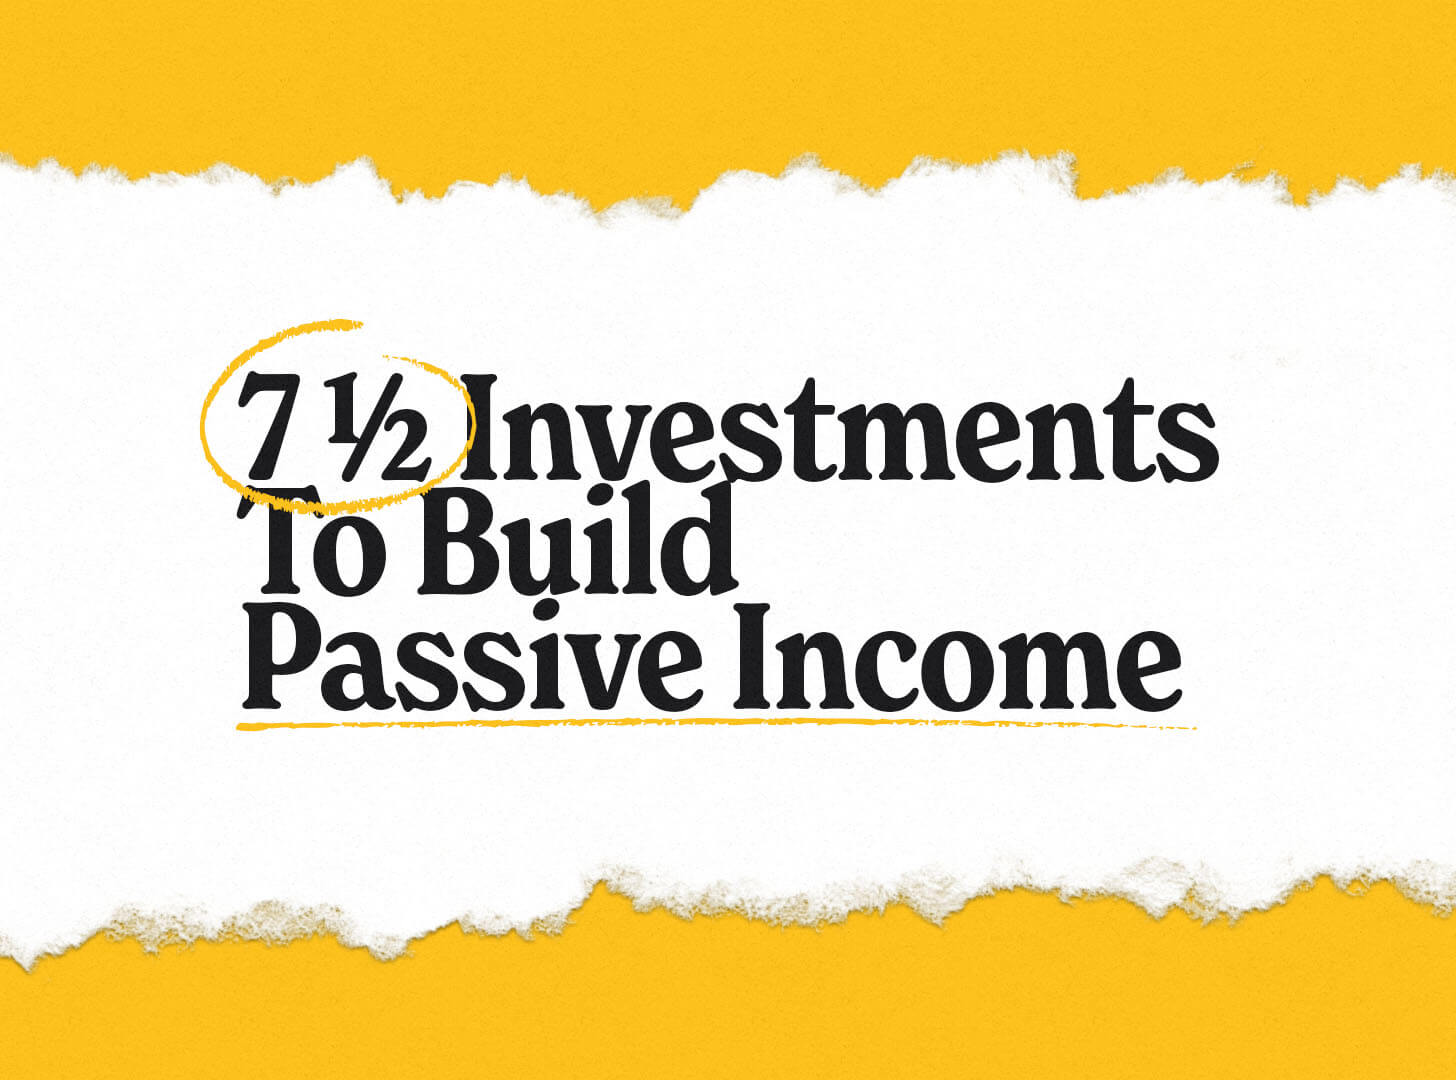 build passive income featured image